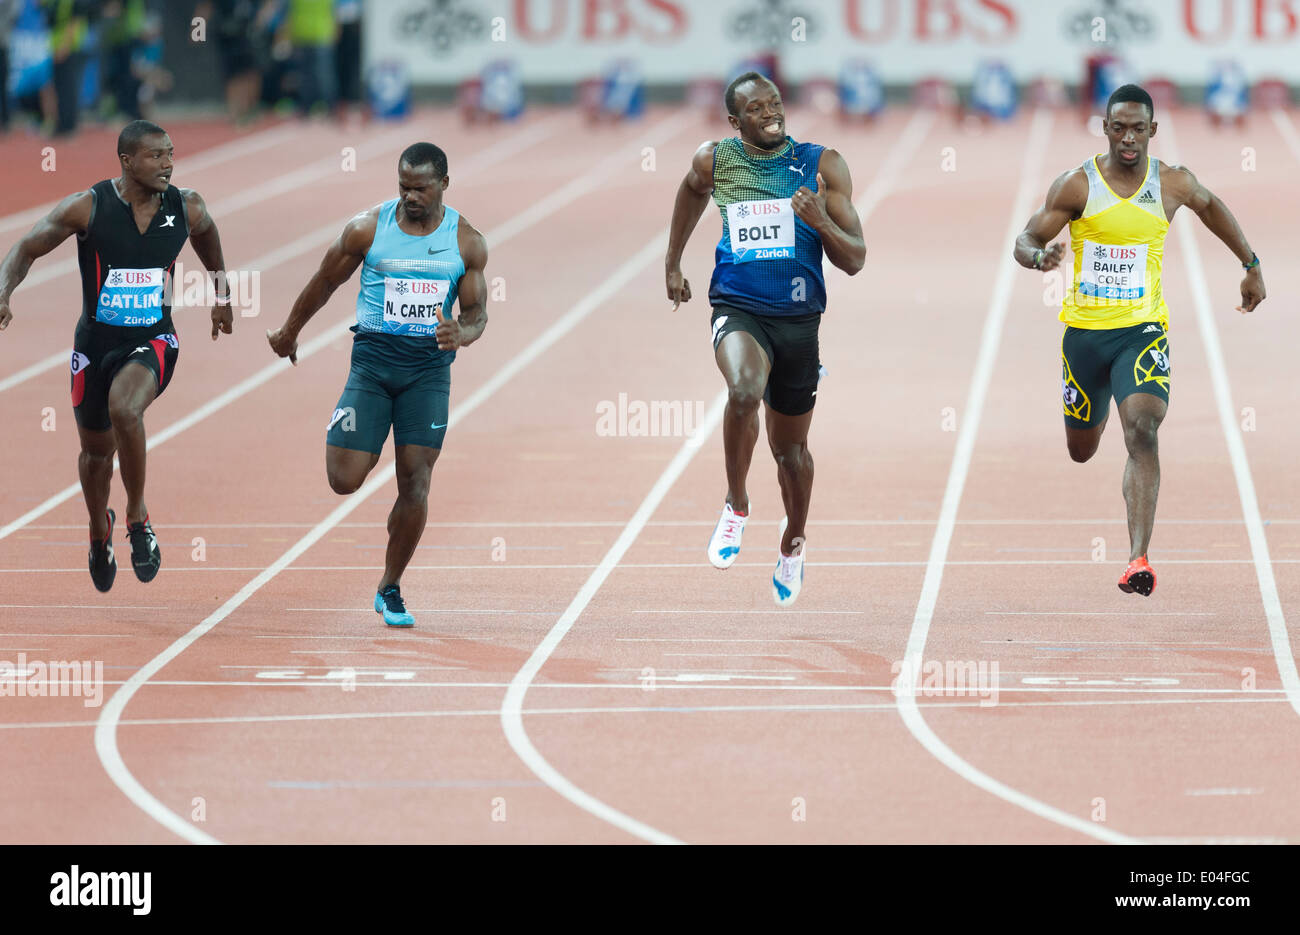 Usain Bolt (JAM) schlägt Nesta Carter (Marmelade, links) und Bailey Cole (Marmelade, rechts) beim Abschlussrennen 100m Zürich IAAF Diamond League Stockfoto